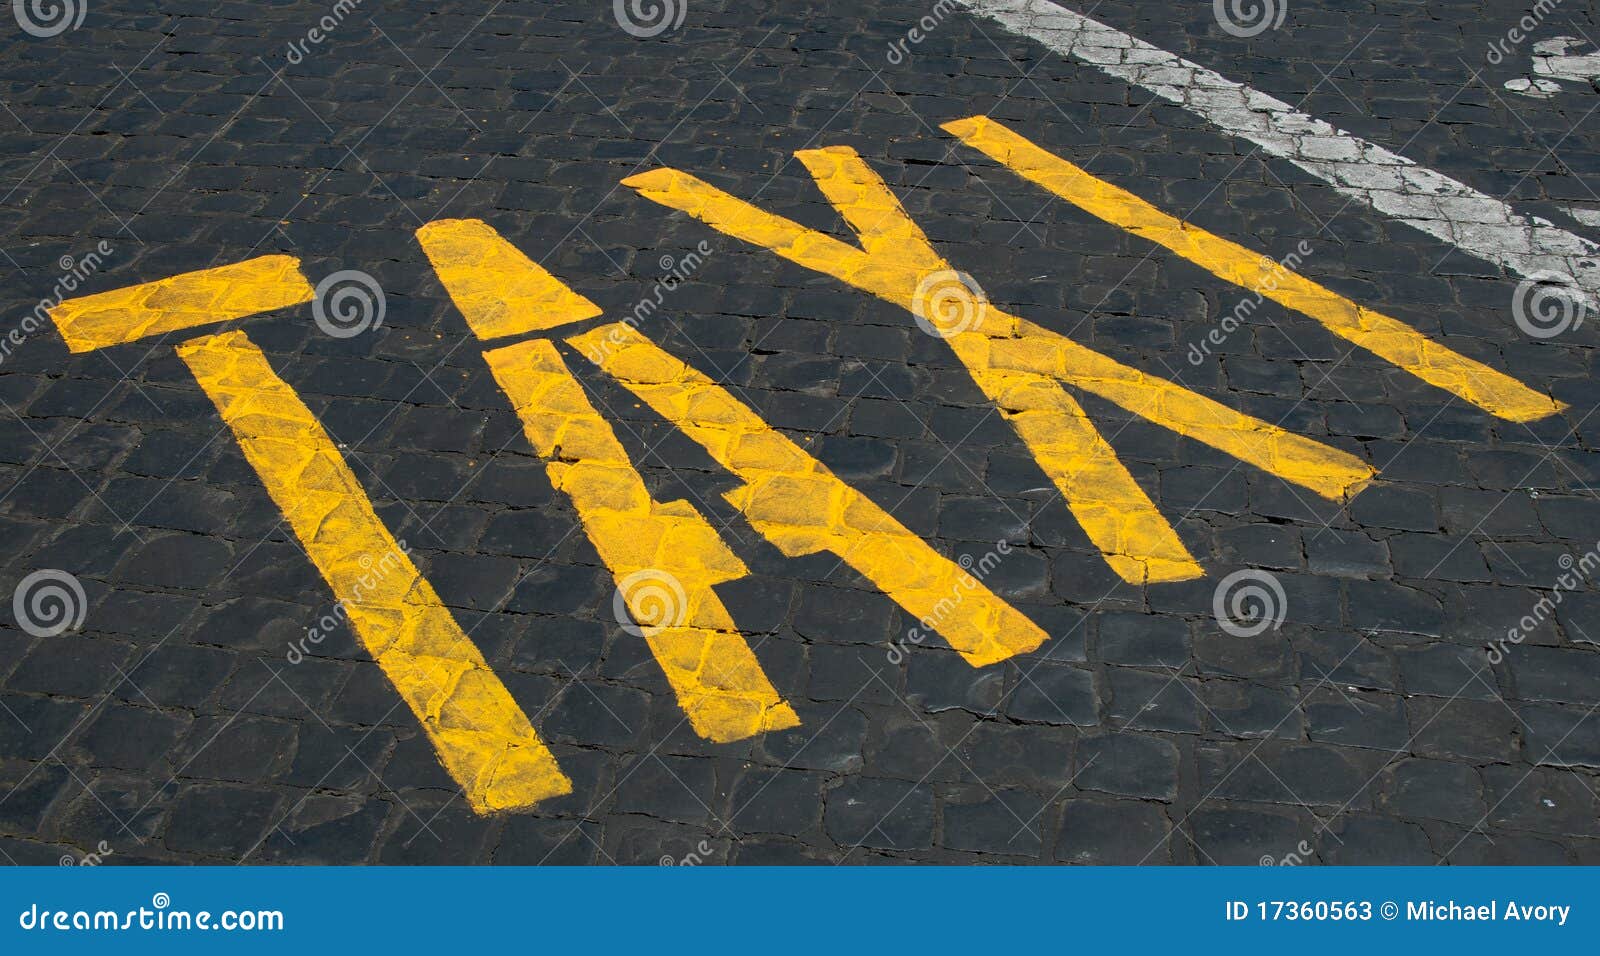 taxi sign on cobblestones